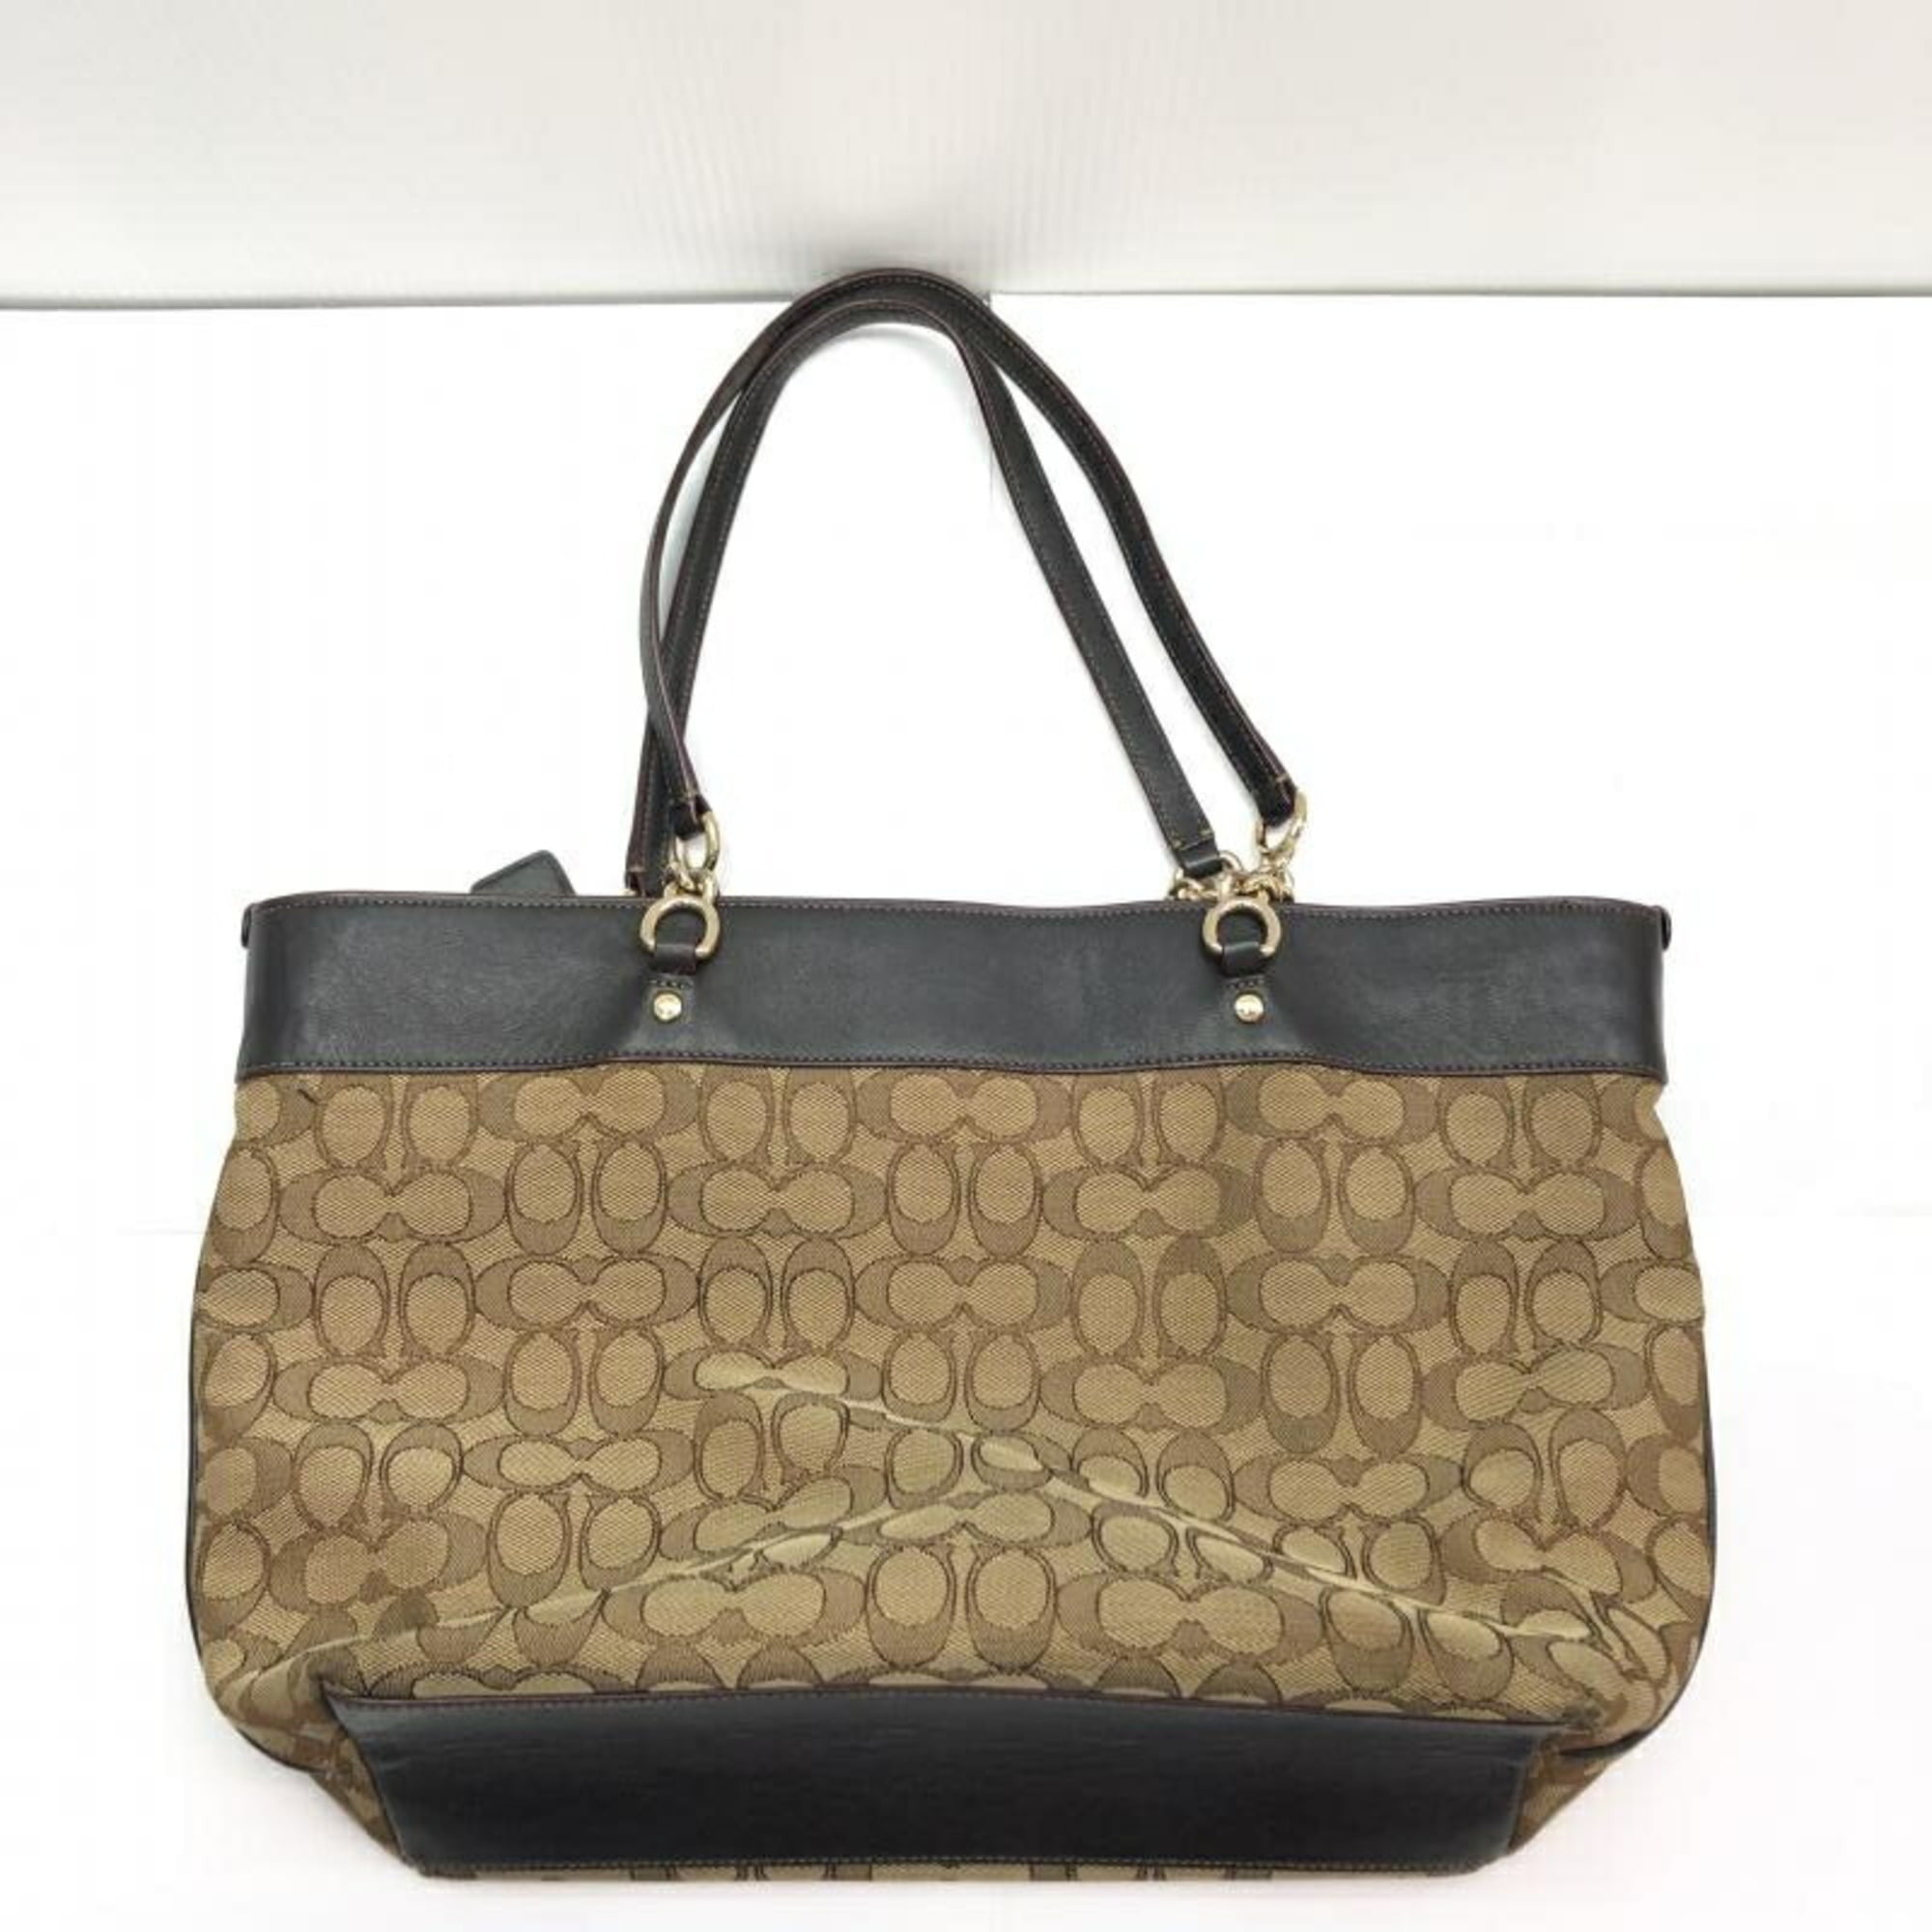 Coach bag | Handbags, Purses & Women's Bags for Sale | Gumtree